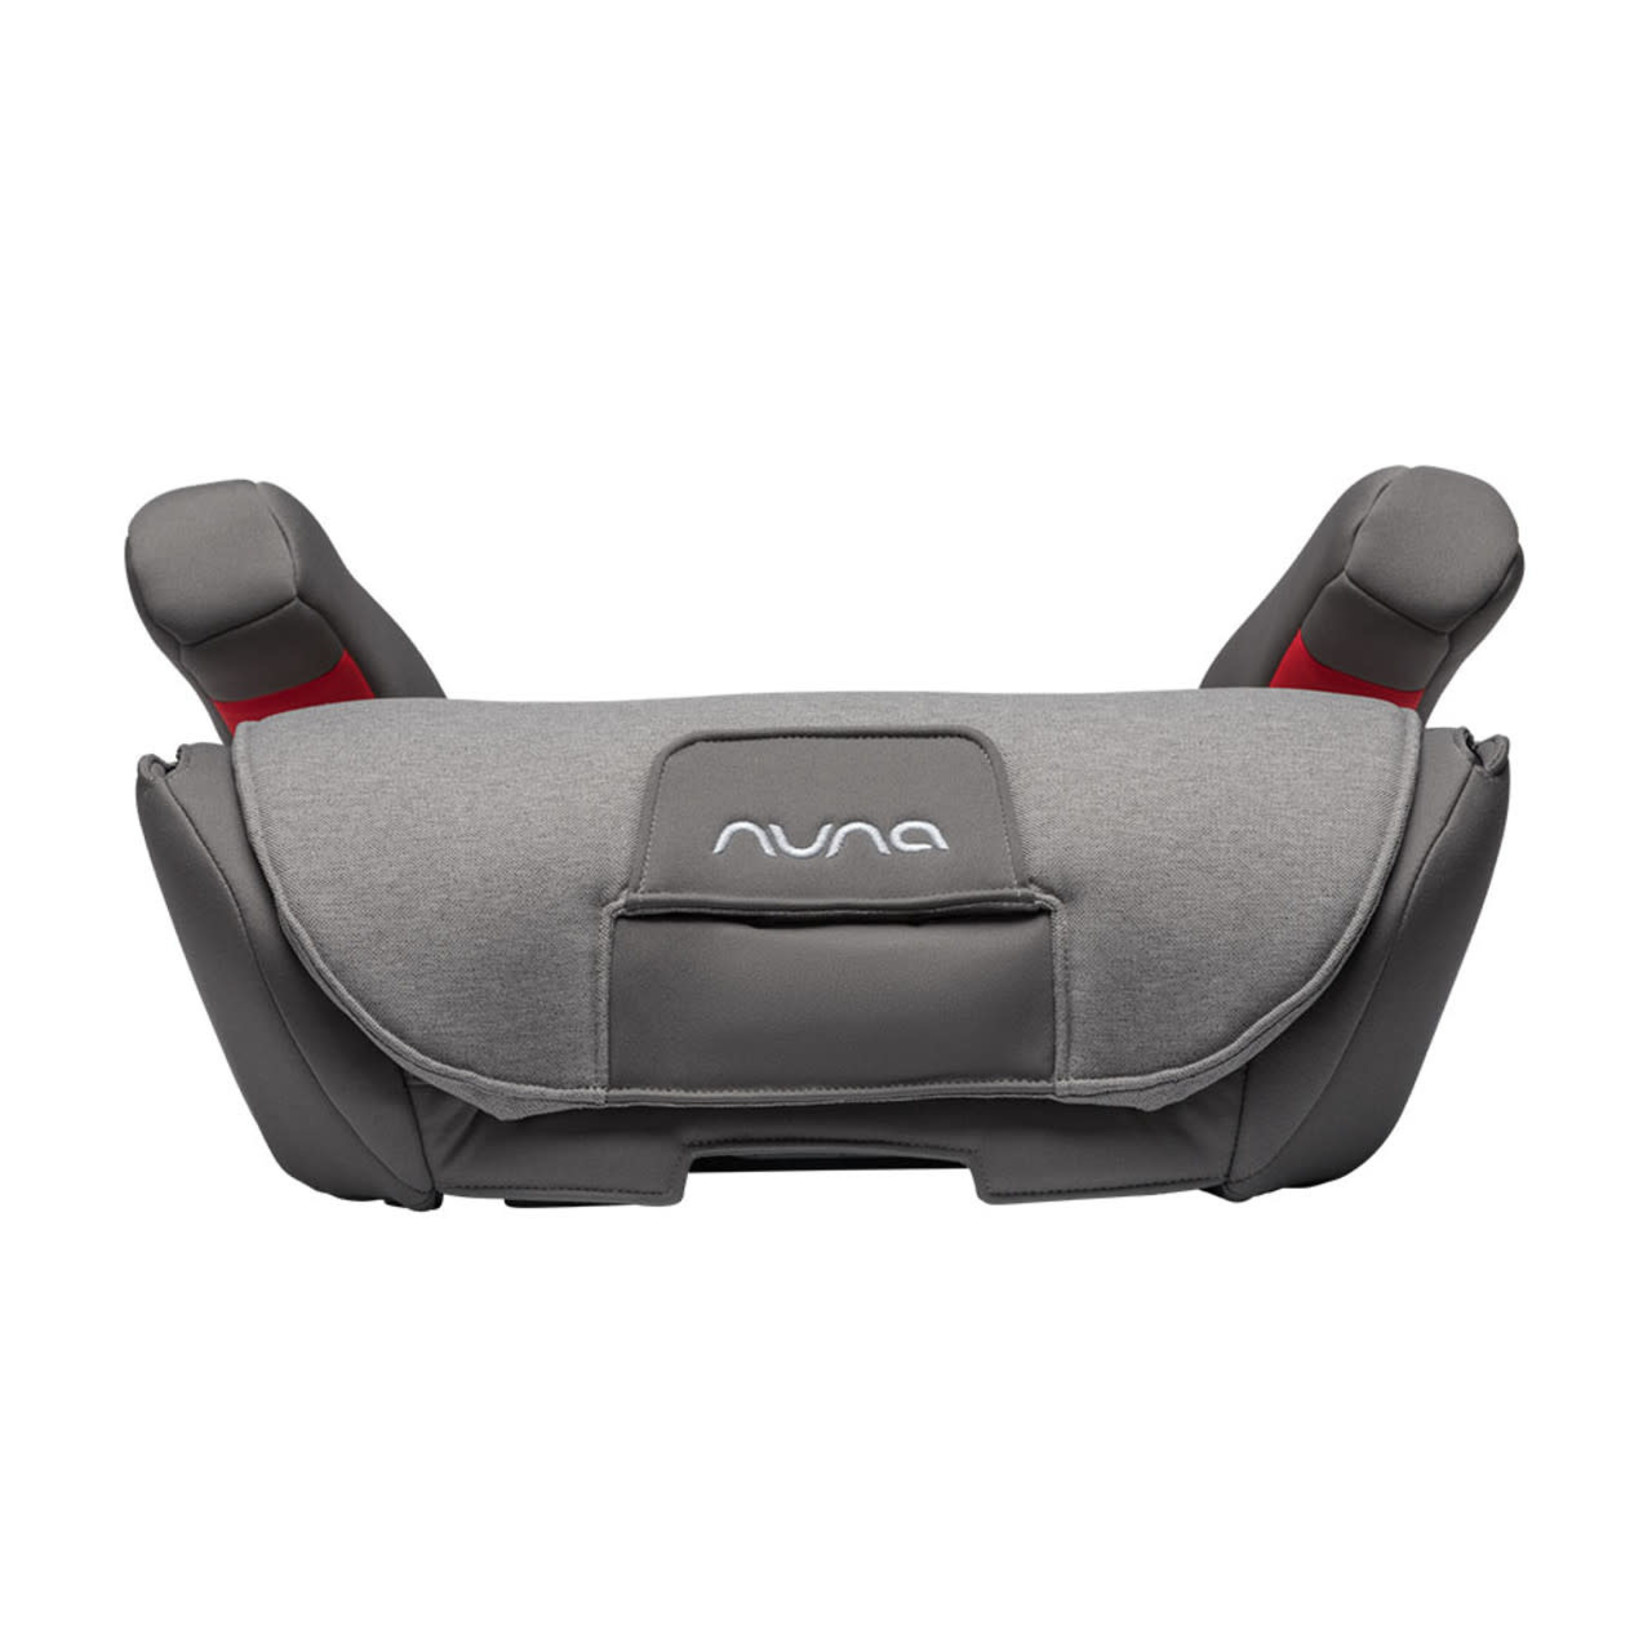 Nuna AACE Booster Seat - Granite